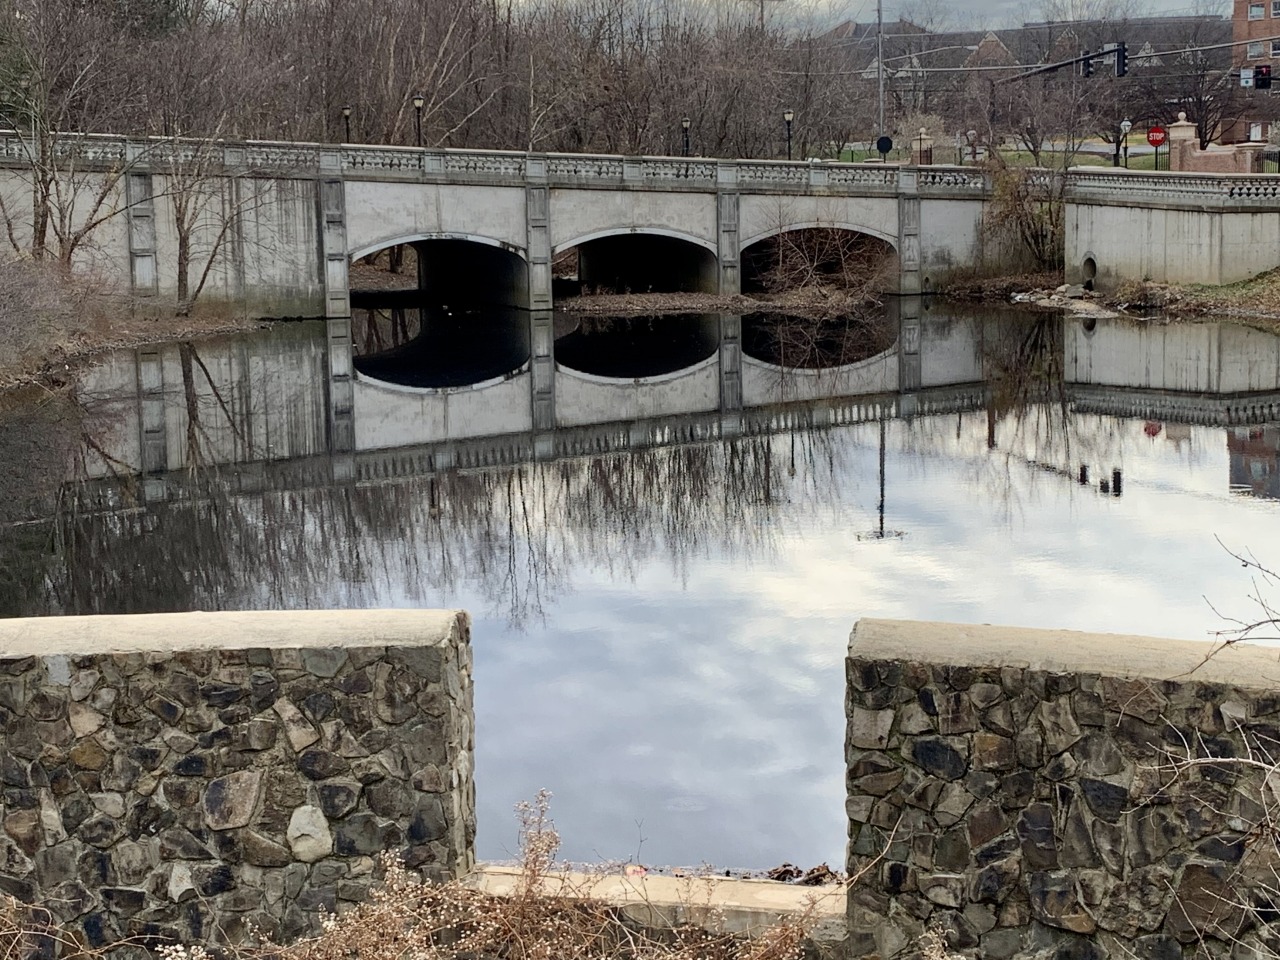 Winter Idyll, Farrcroft Pond, Fairfax City, 2021. #cityscape#pond#bridge#Fairfax city#virginia#2021 #photographers on tumblr